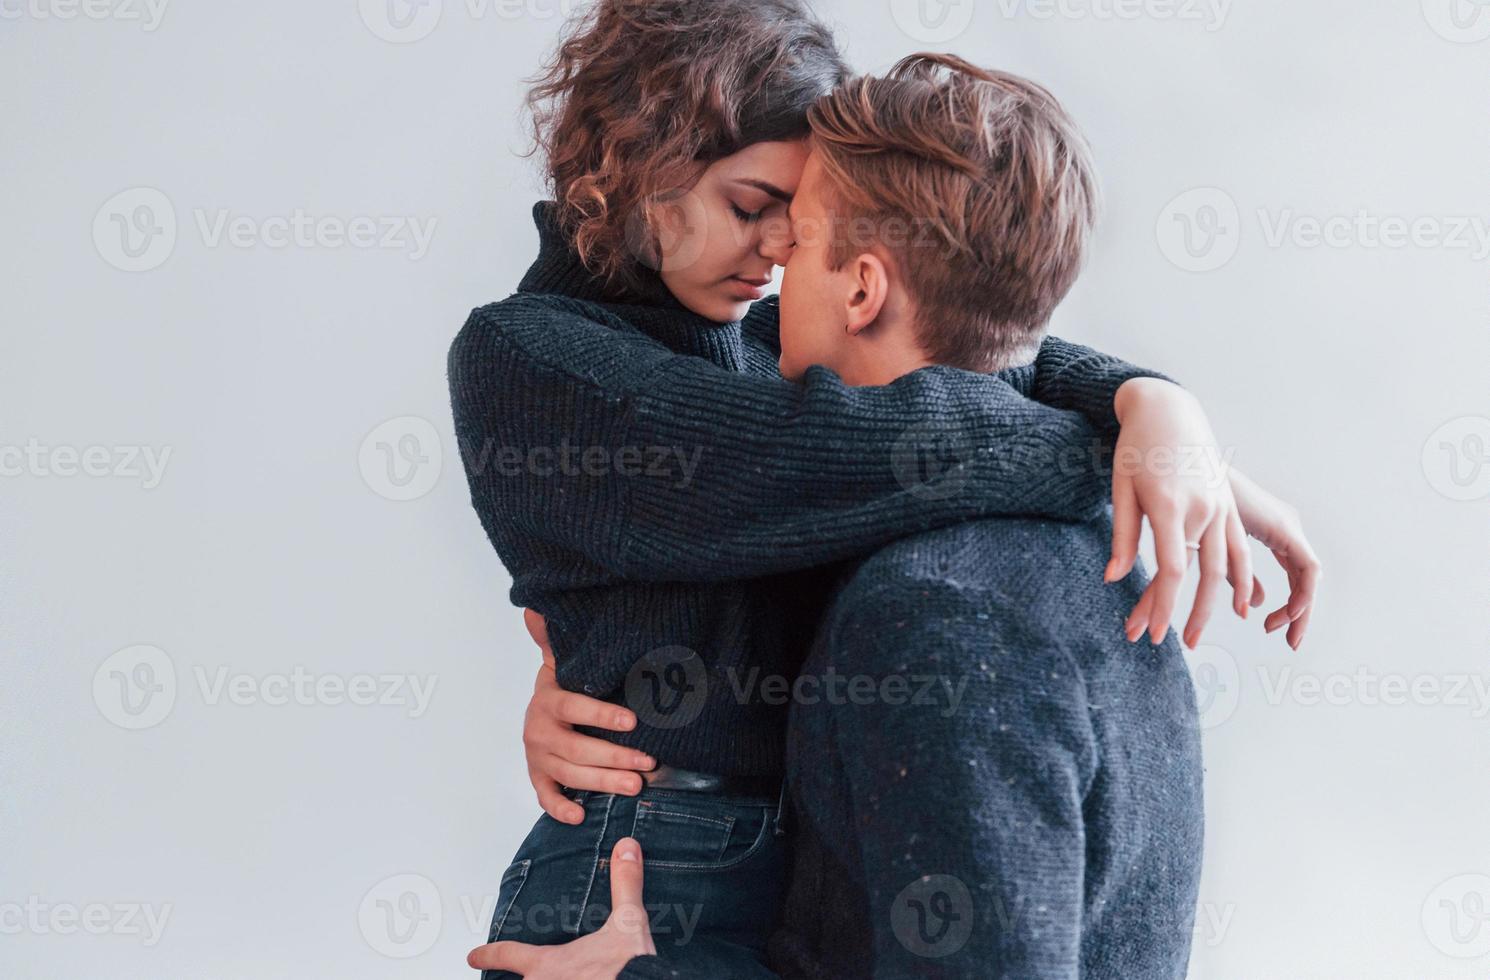 casal jovem bonito se abraçando dentro de casa no estúdio foto